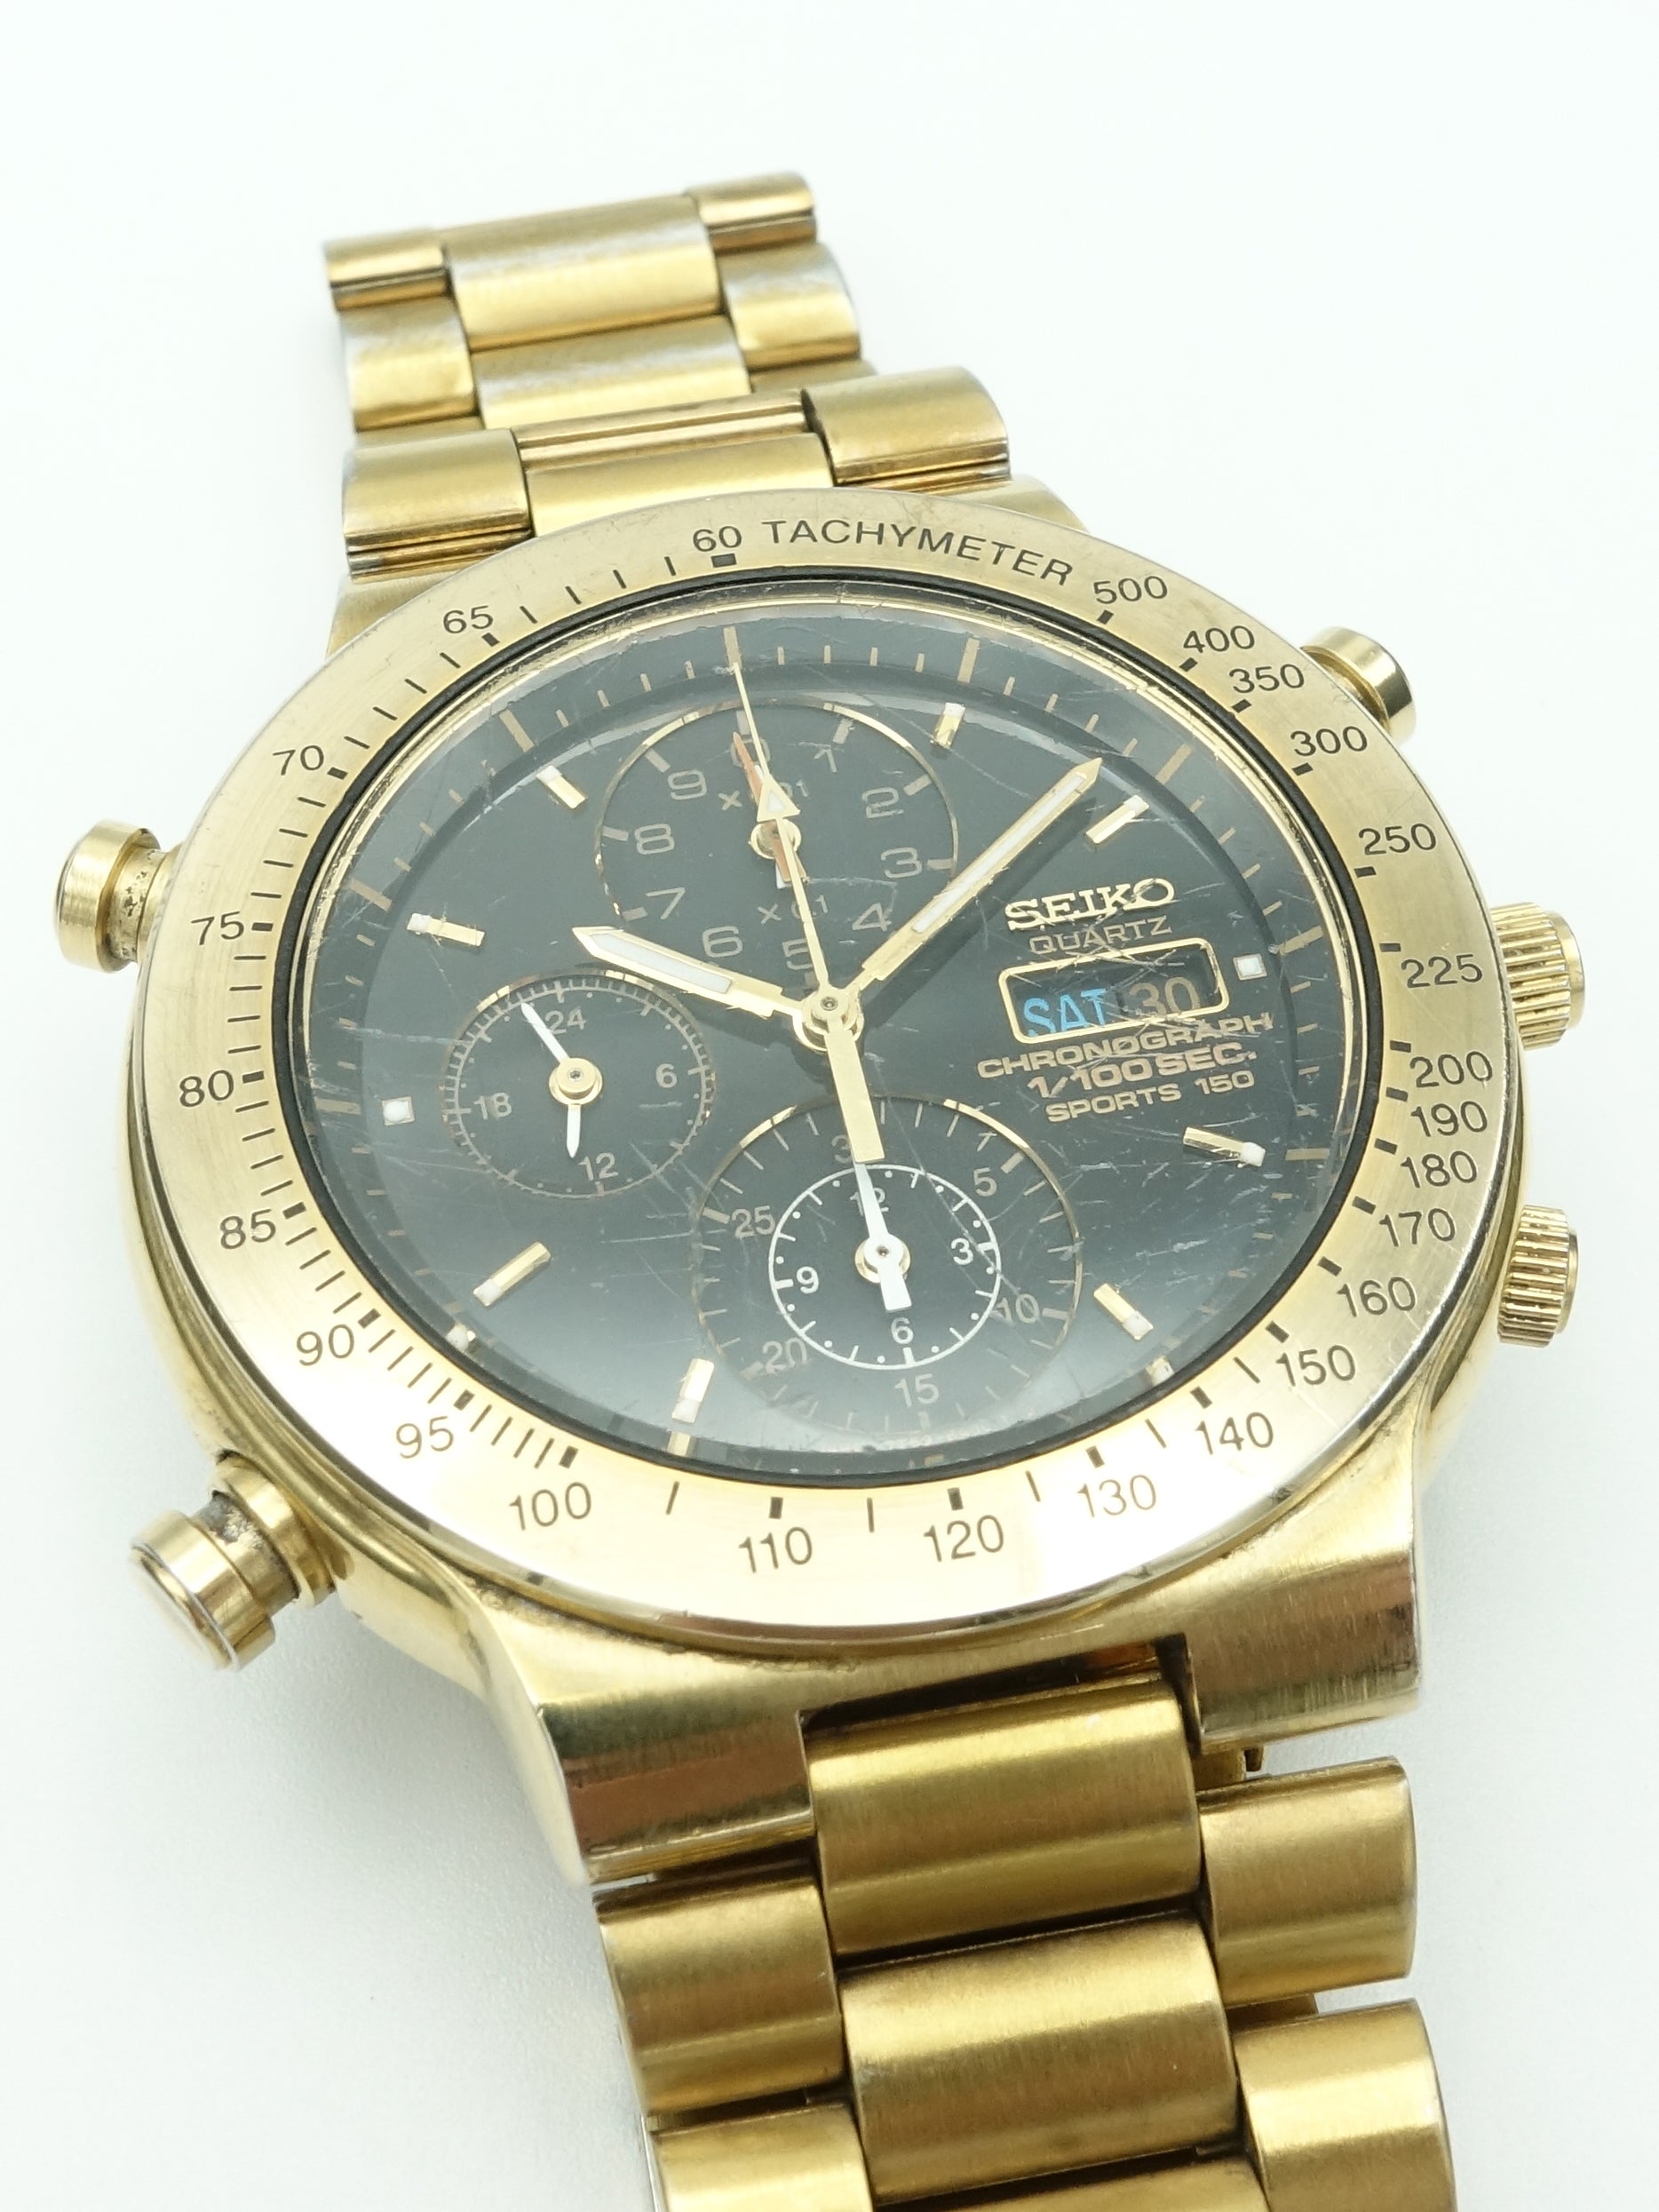 Seiko 1/100 Chronograph Ref. 7T59-6A00 – Timepiece Vintage